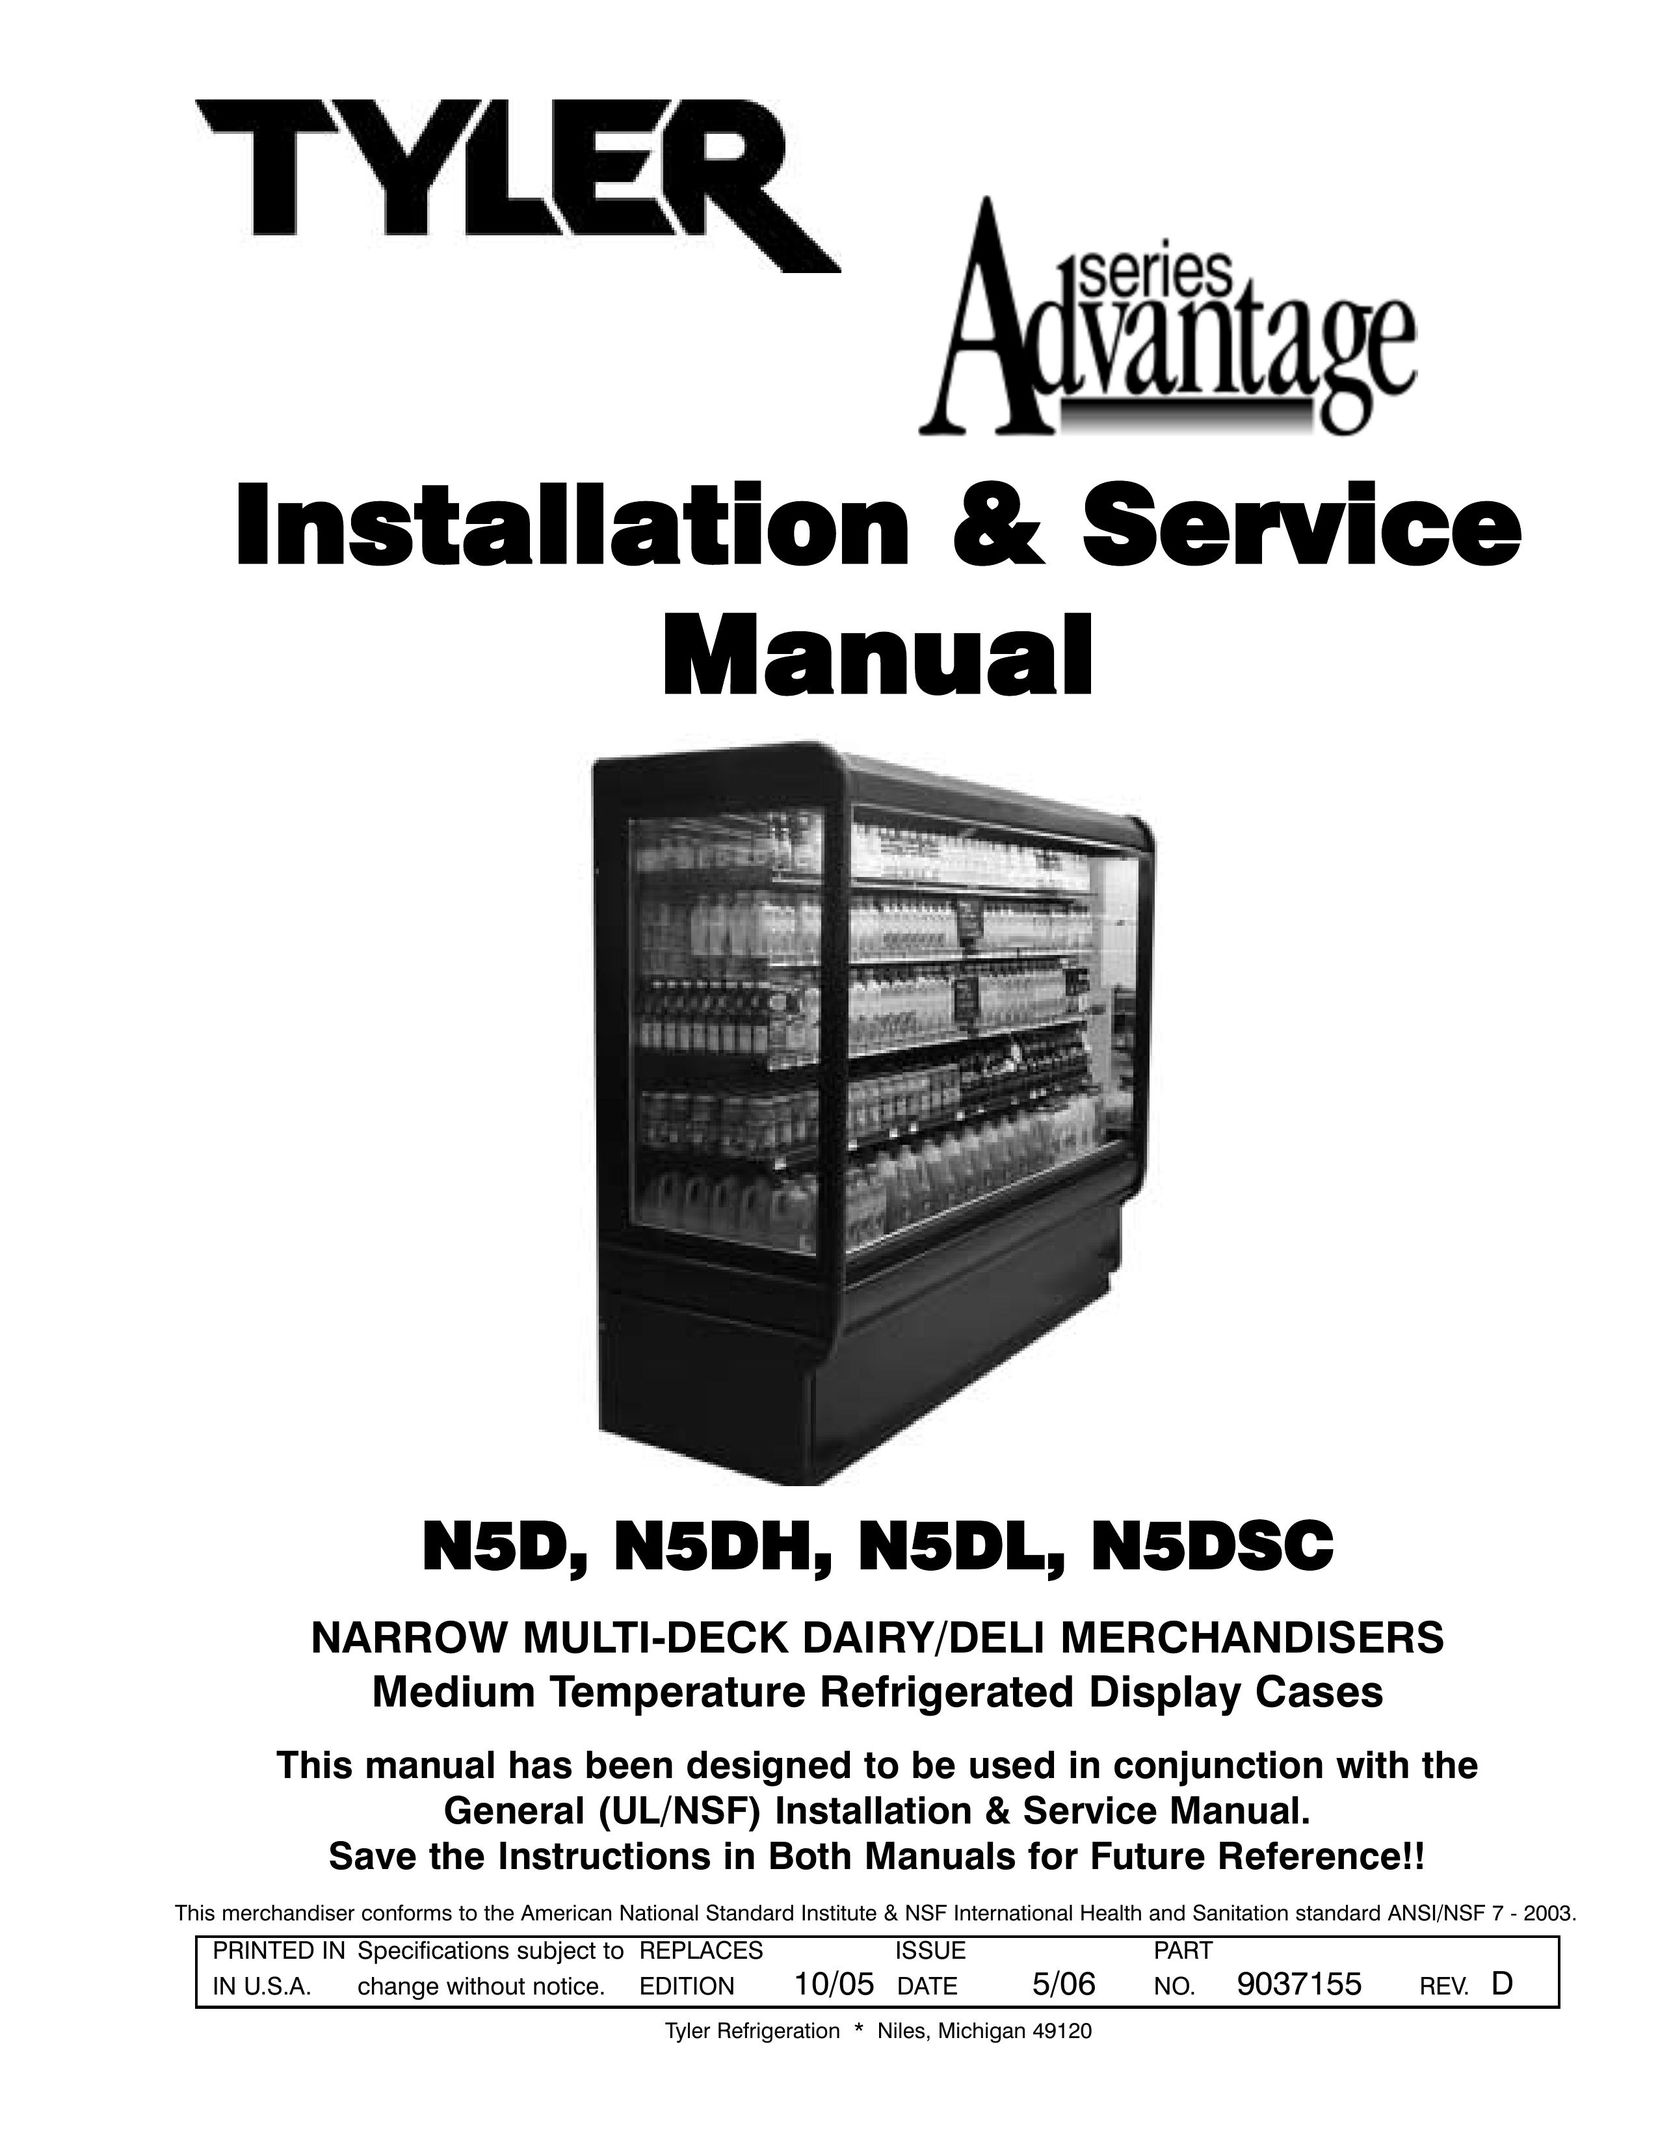 Tyler Refrigeration N5DL Thermostat User Manual